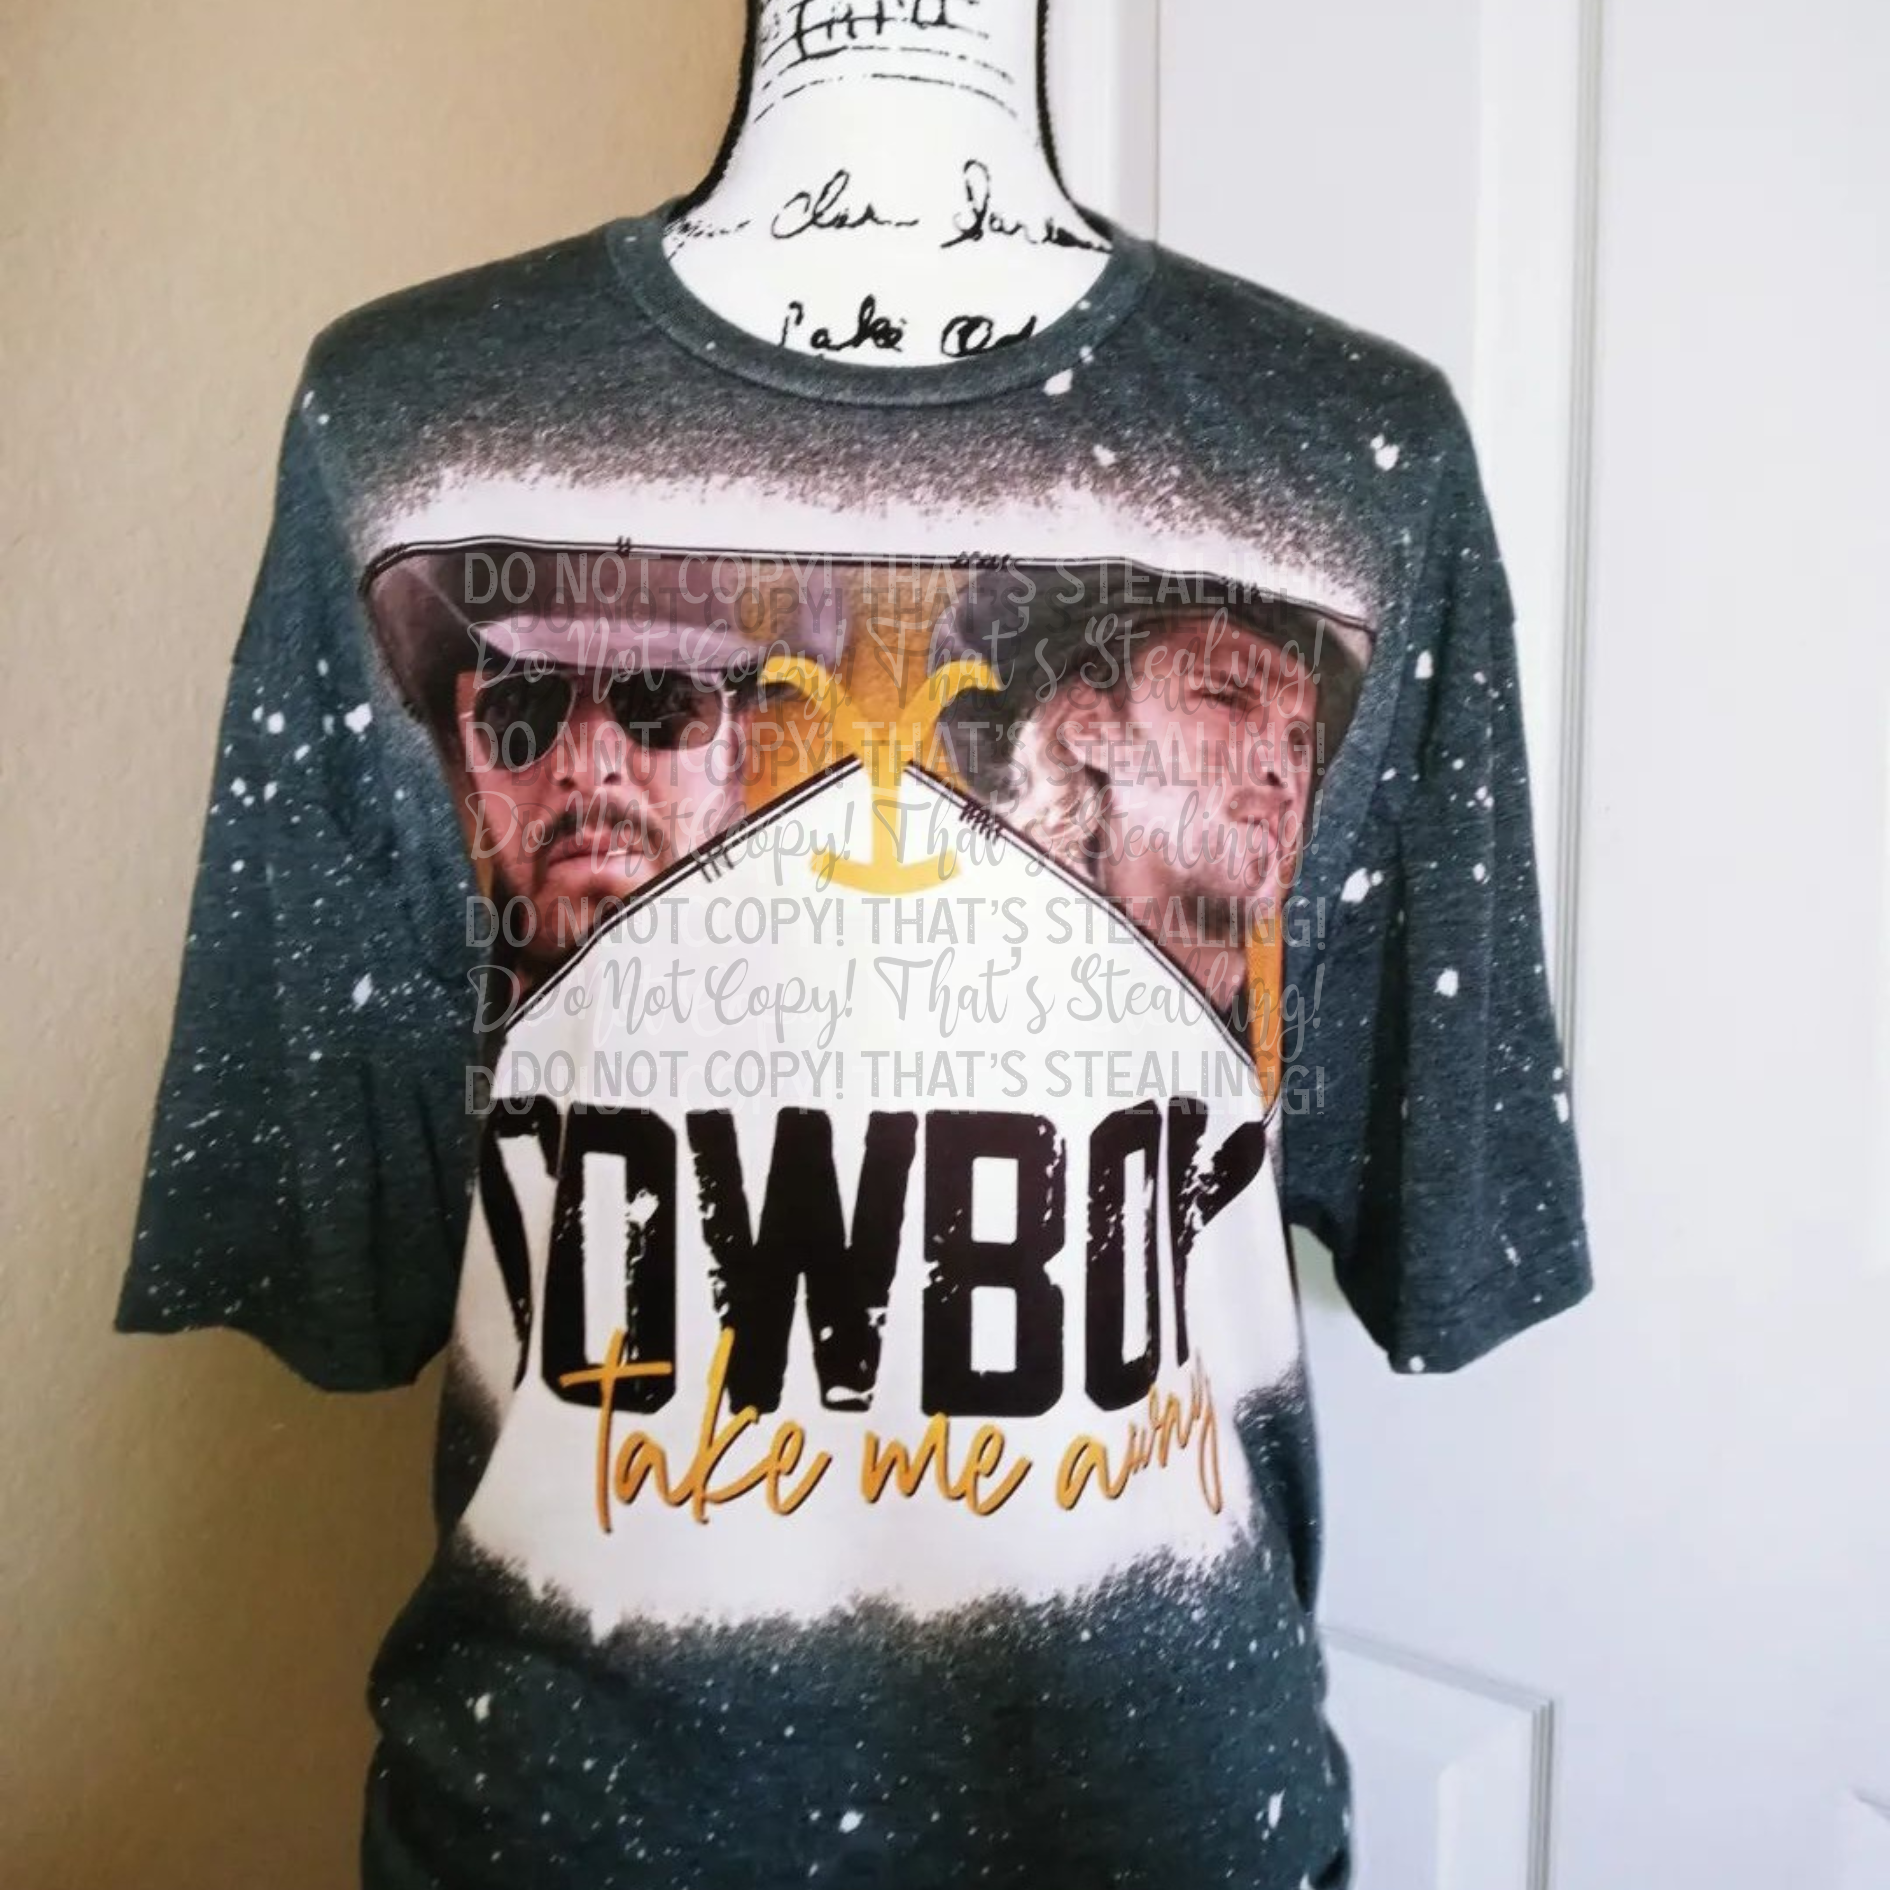 Cowboy Take Me Away Bleached Shirt - Mayan Sub Shop